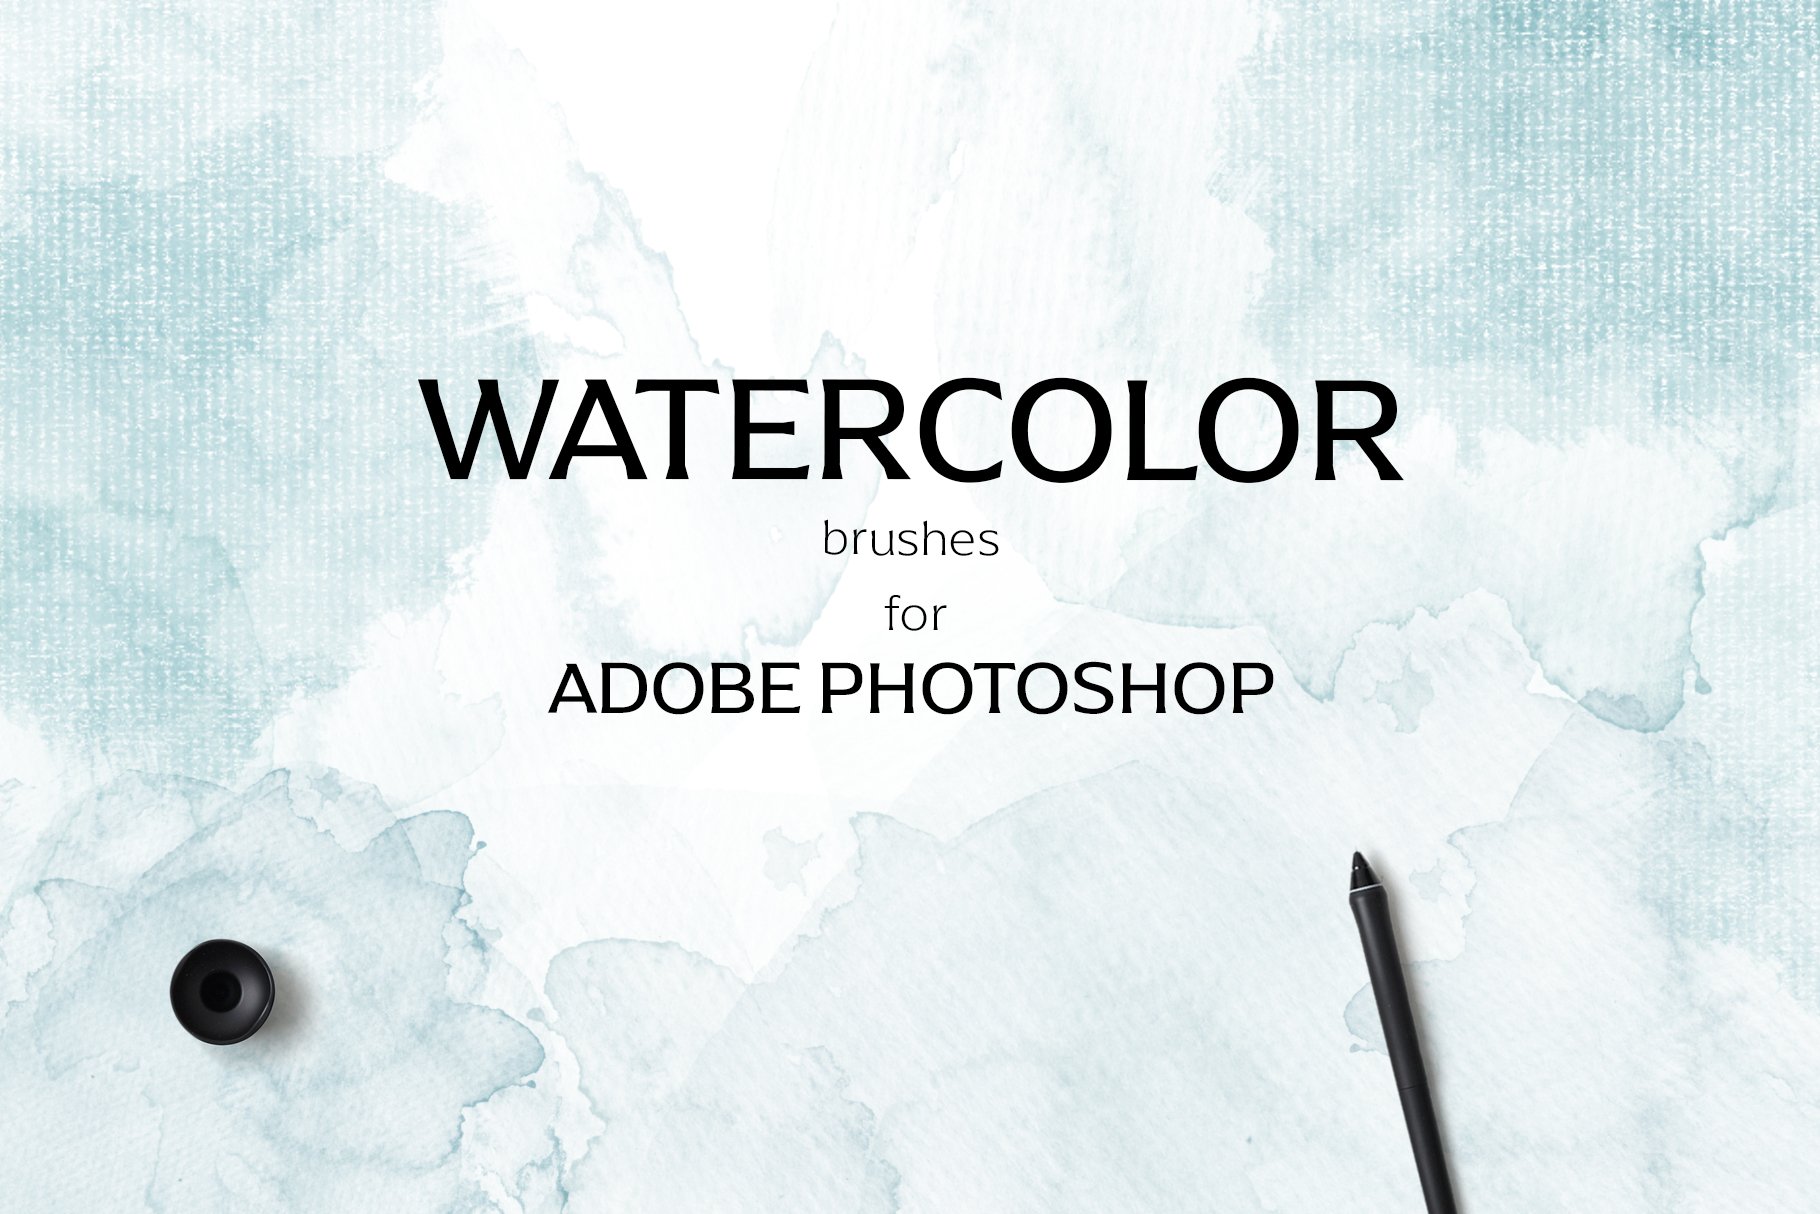 Watercolor Photoshop brush setcover image.